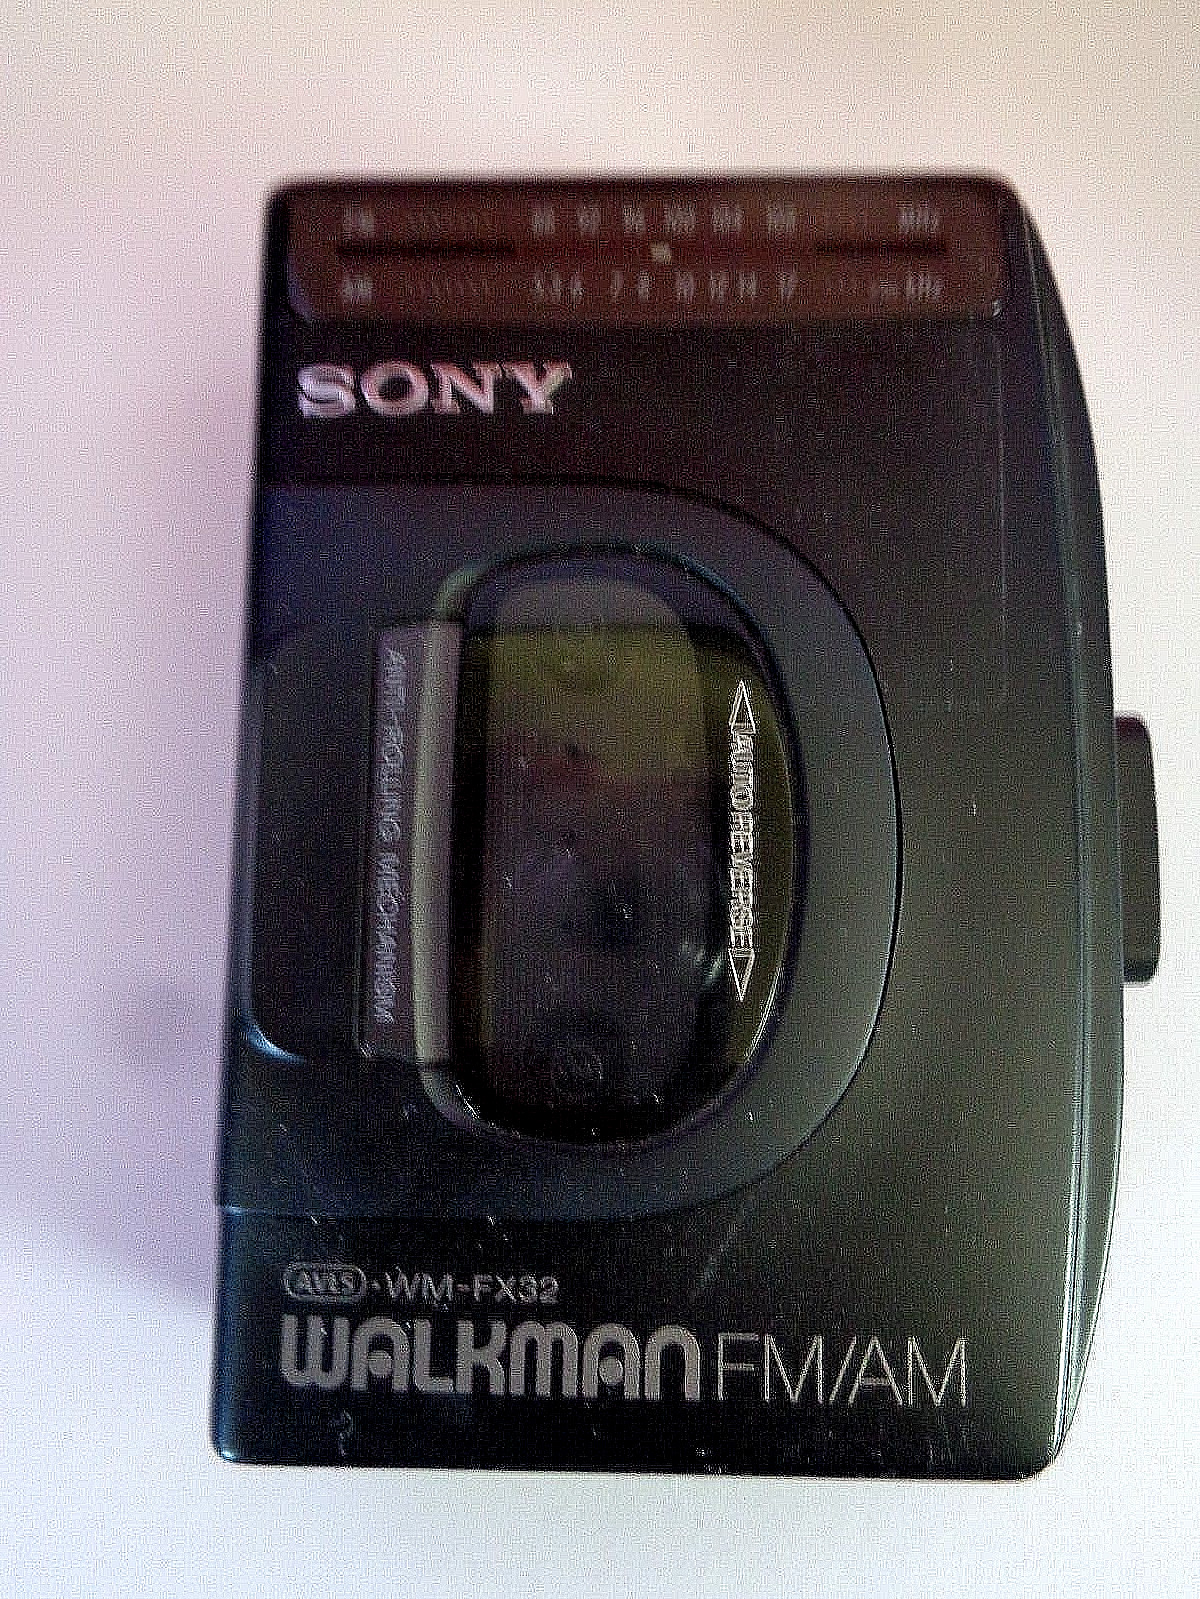 VINTAGE SONY WALKMAN WM-FX32 - CASSETTE PLAYER & AM/FM RADIO COMBO - TESTED